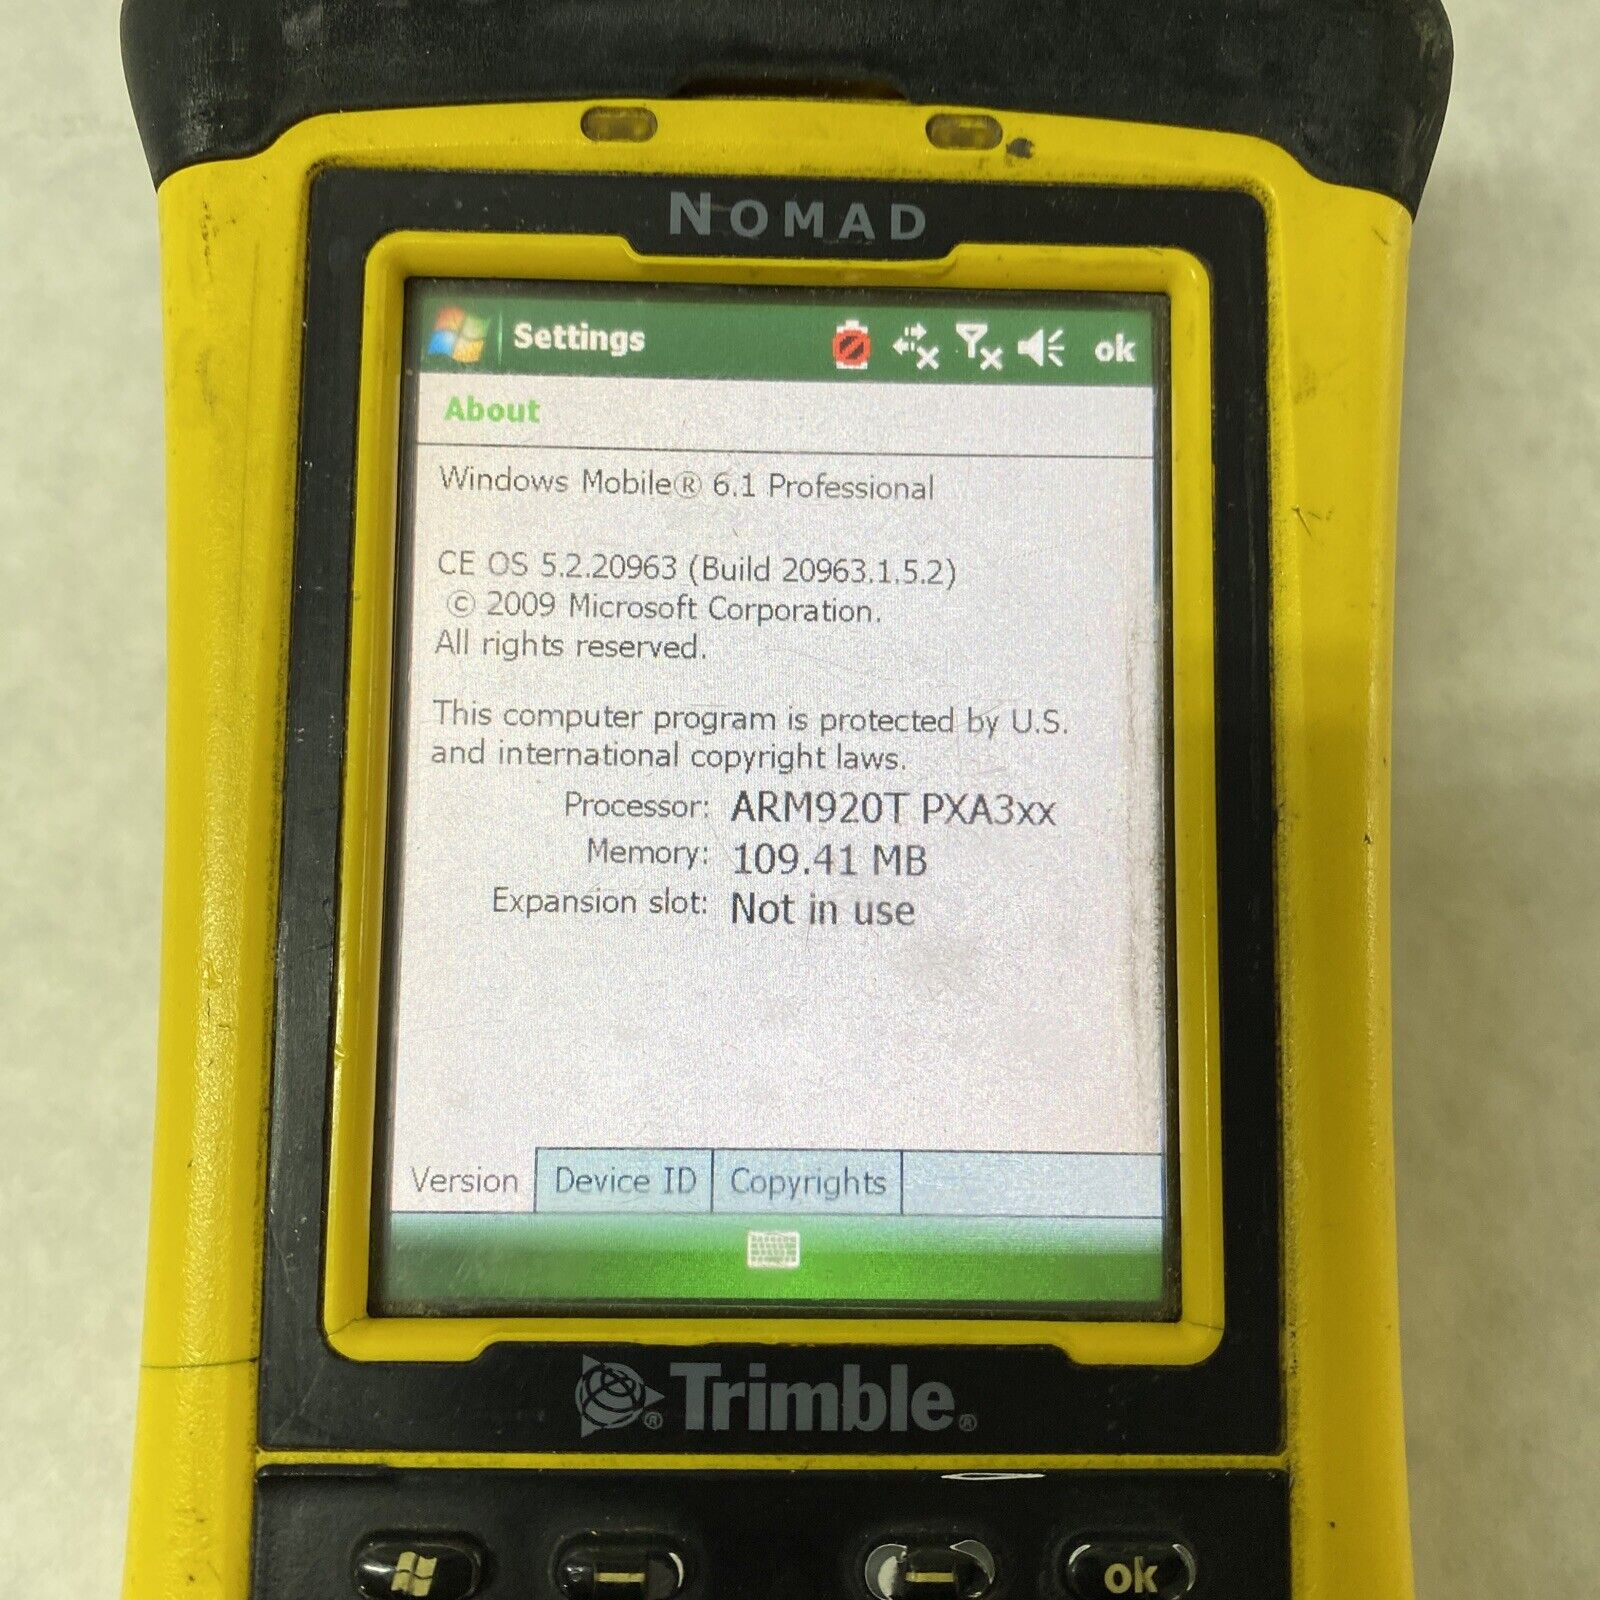 Trimble Nomad Data Collector Scanner Windows 6.1 Bluetooth GPS (f)